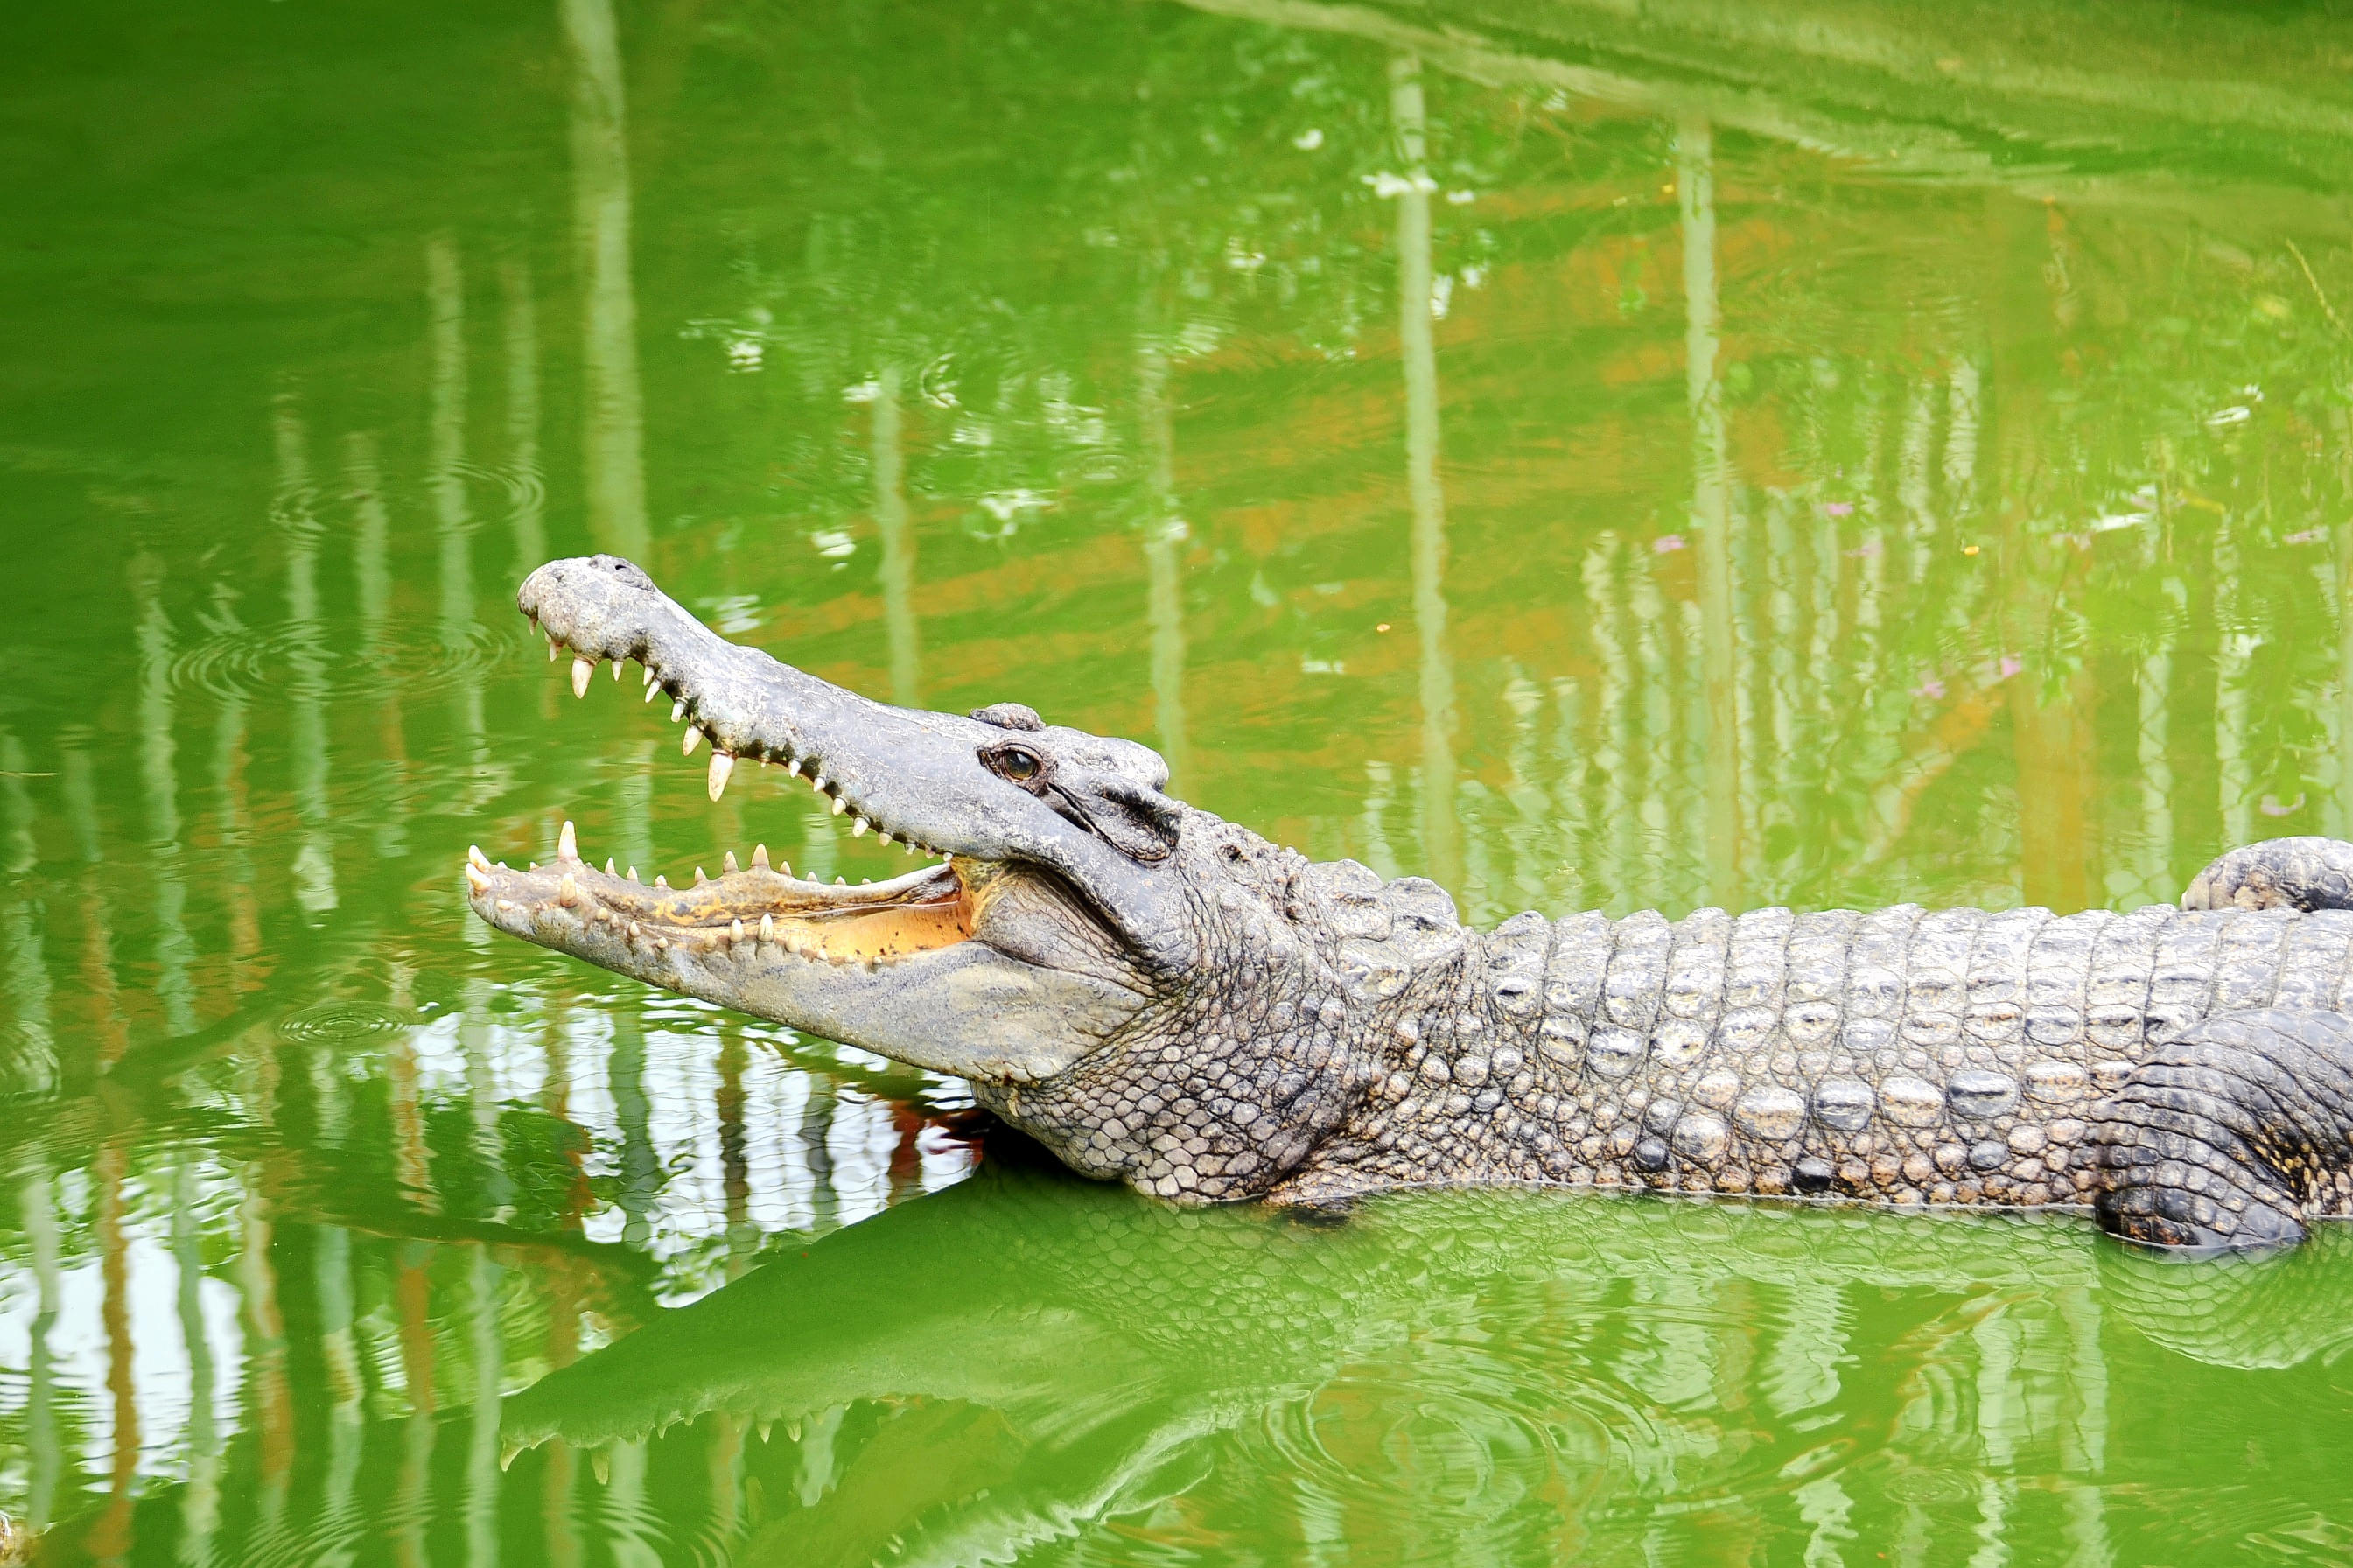 Crocodile Adventureland Overview